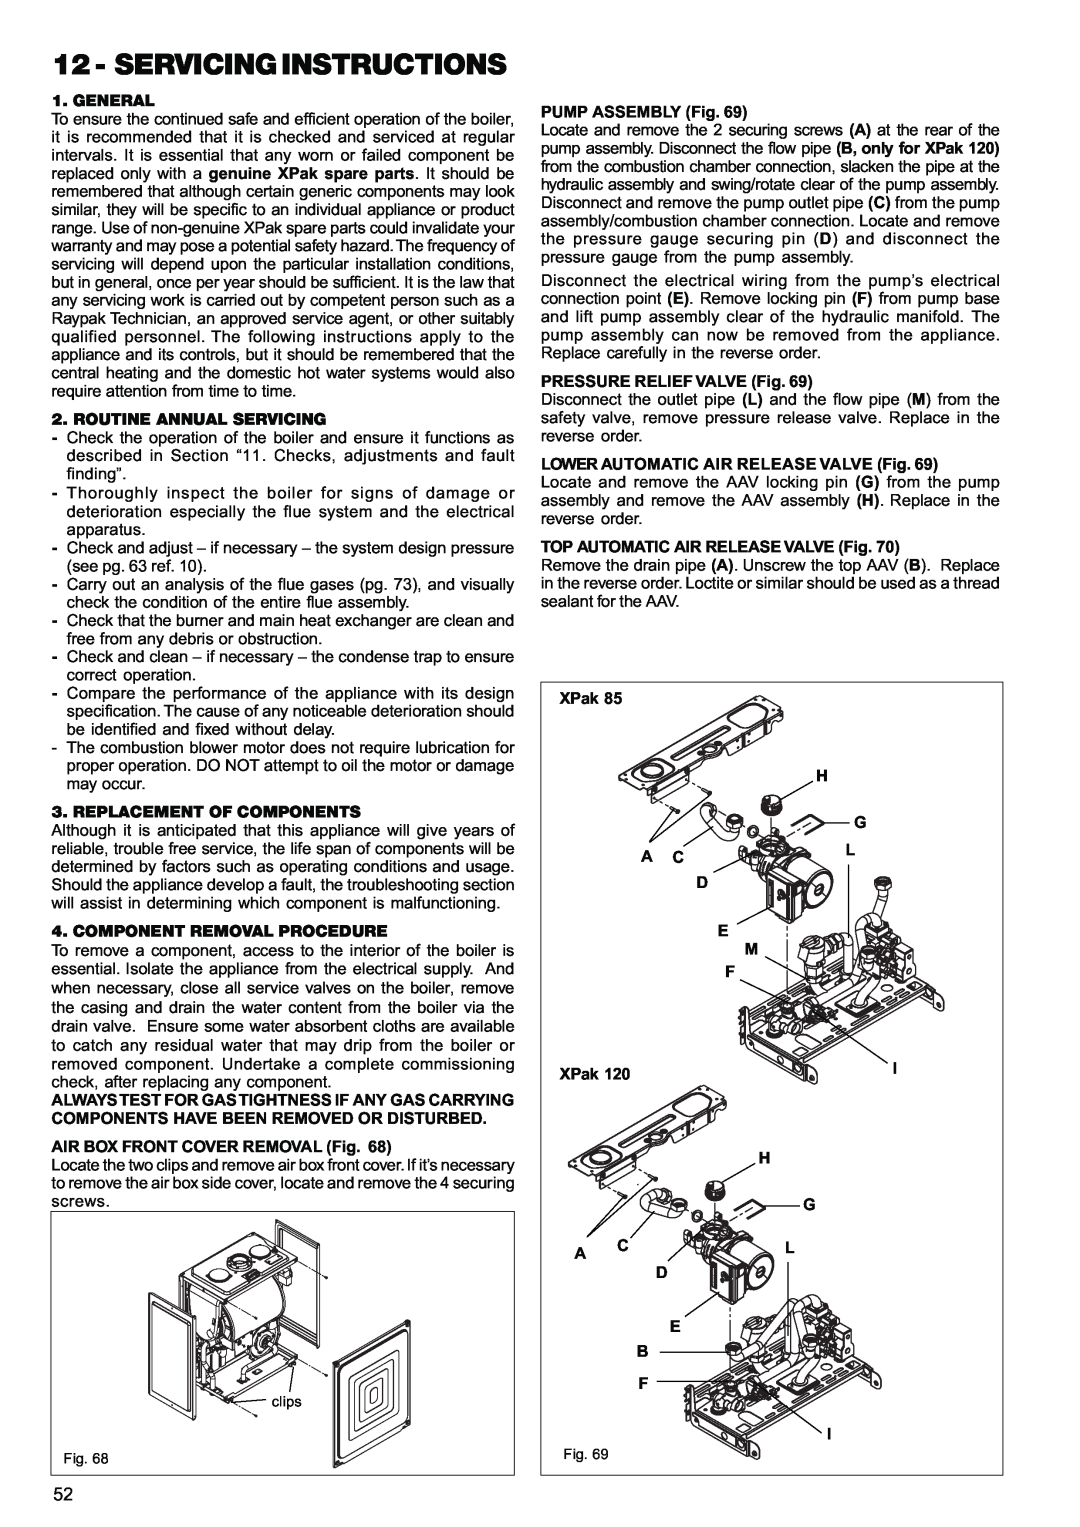 Raypak 85, 120 manual Servicing Instructions 